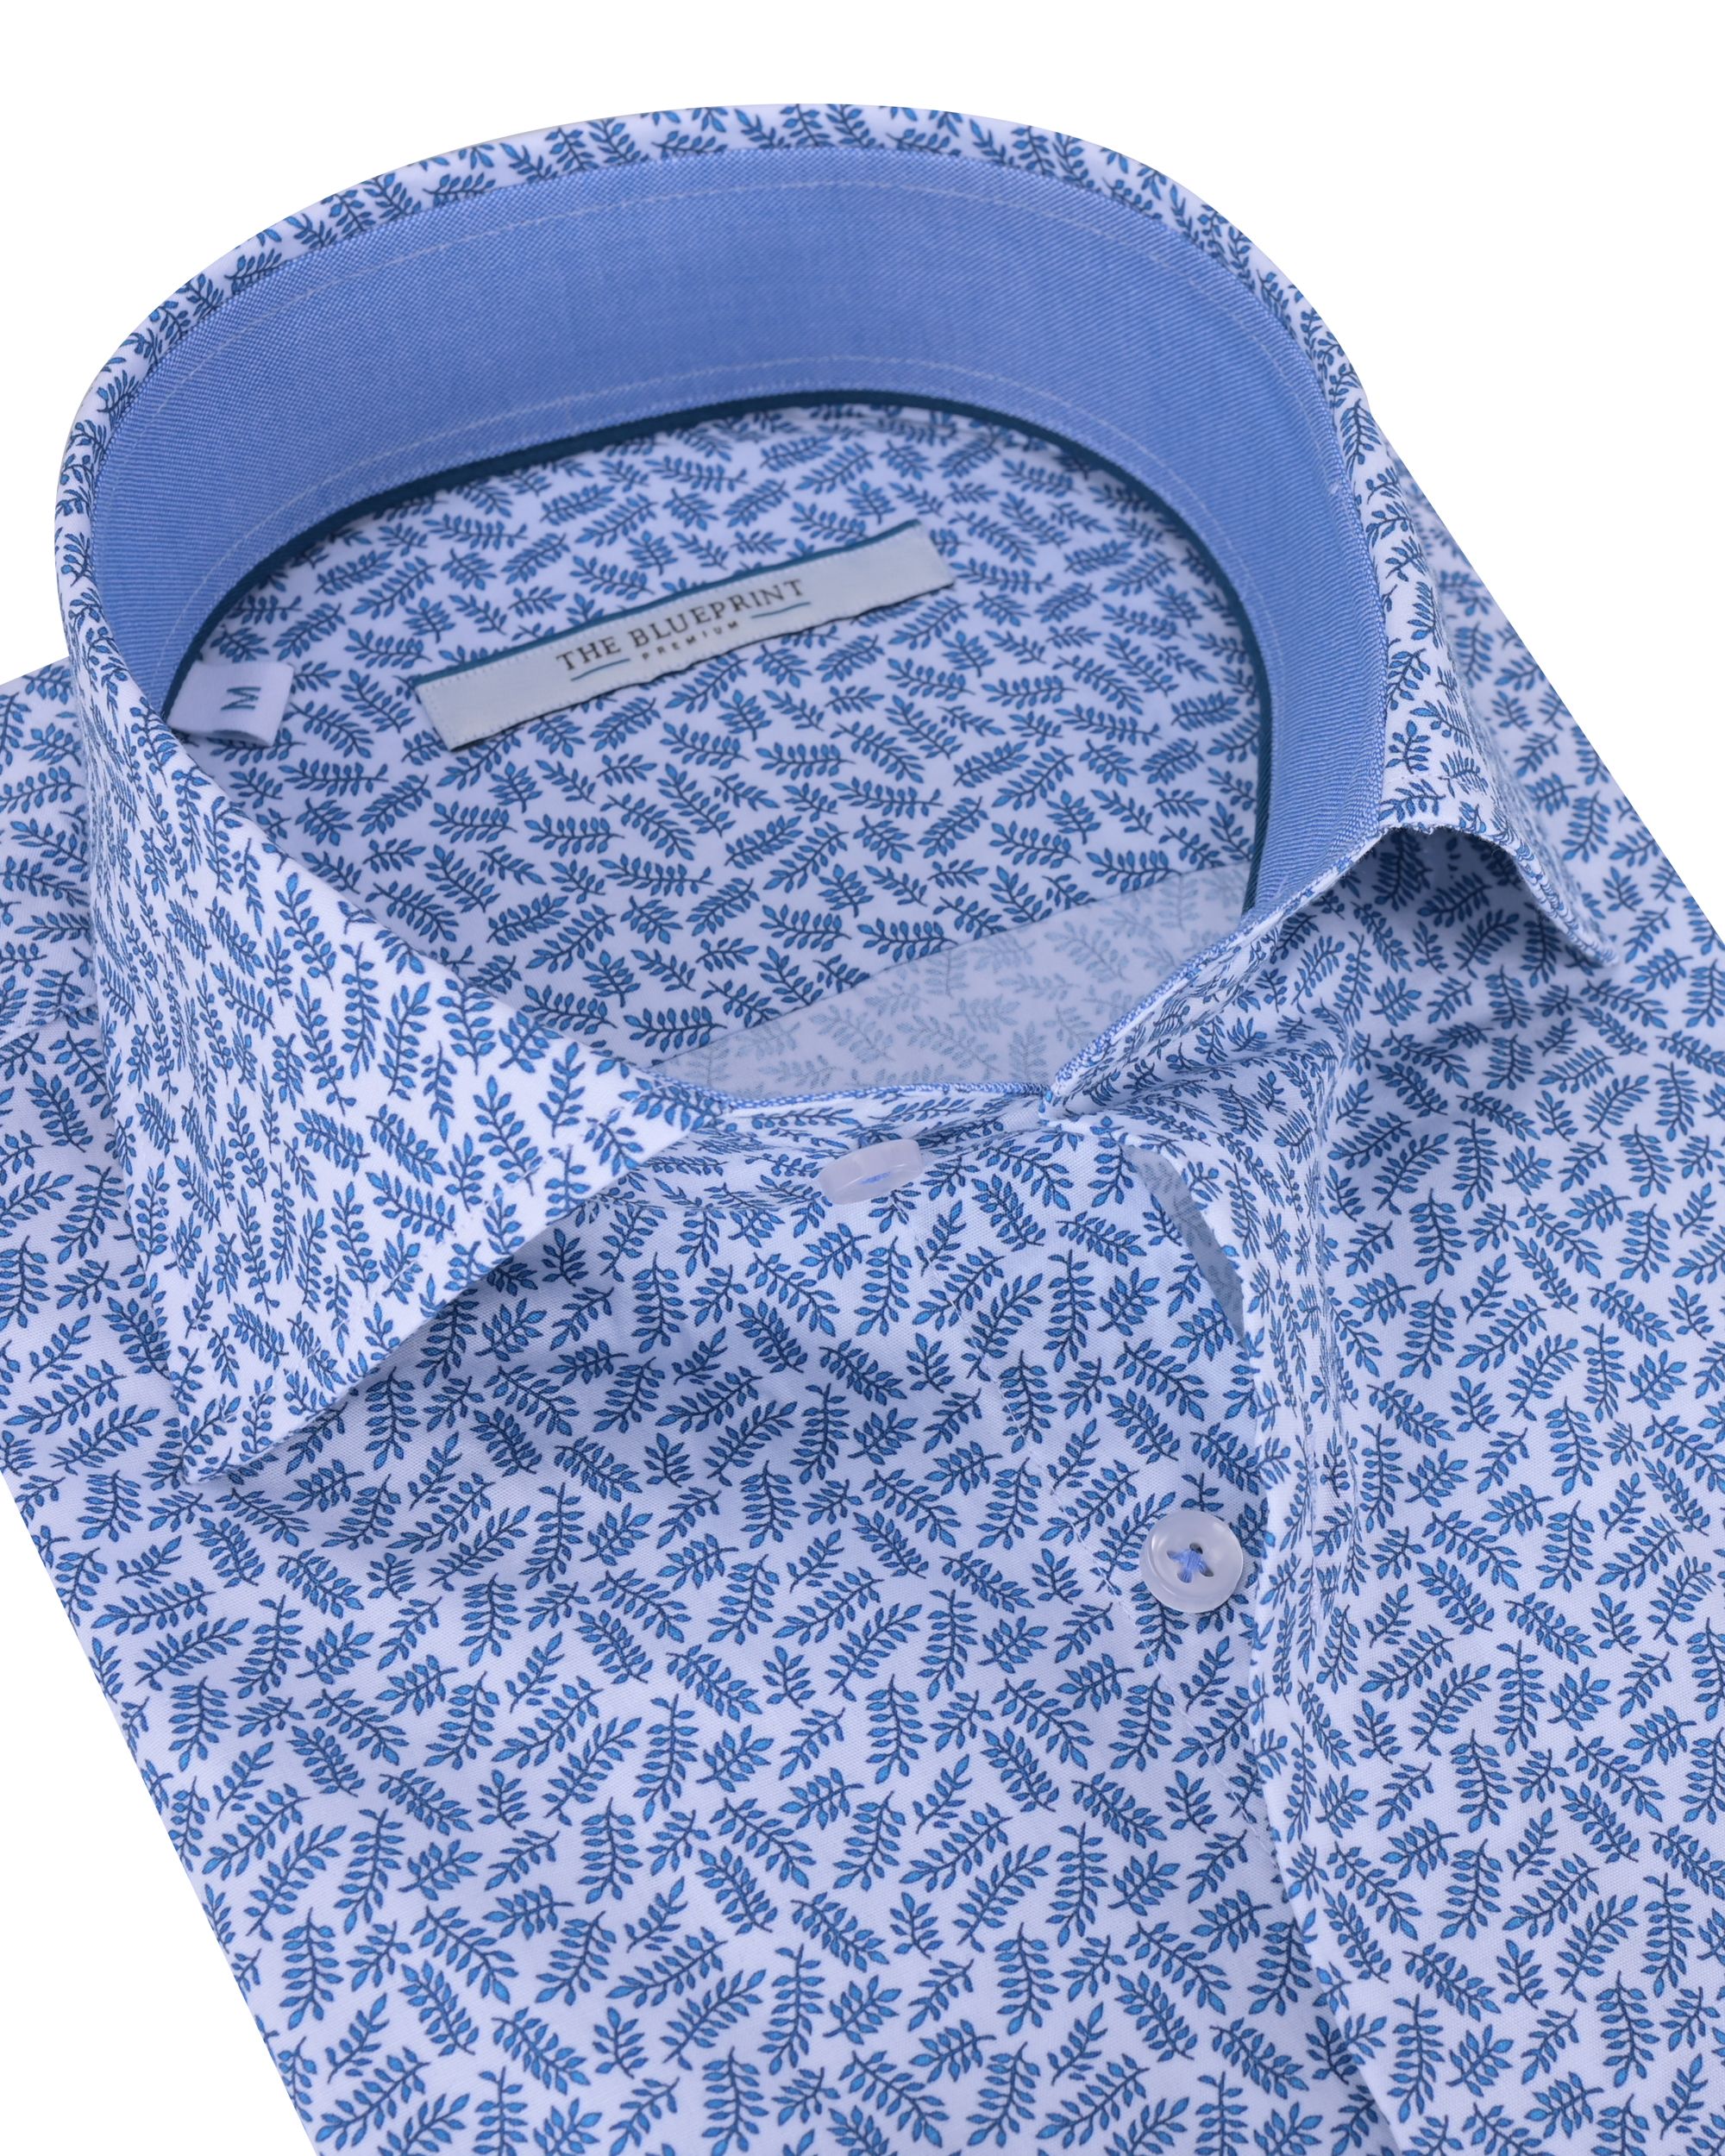 The BLUEPRINT Premium Trendy overhemd LM Blauw dessin 084838-001-L